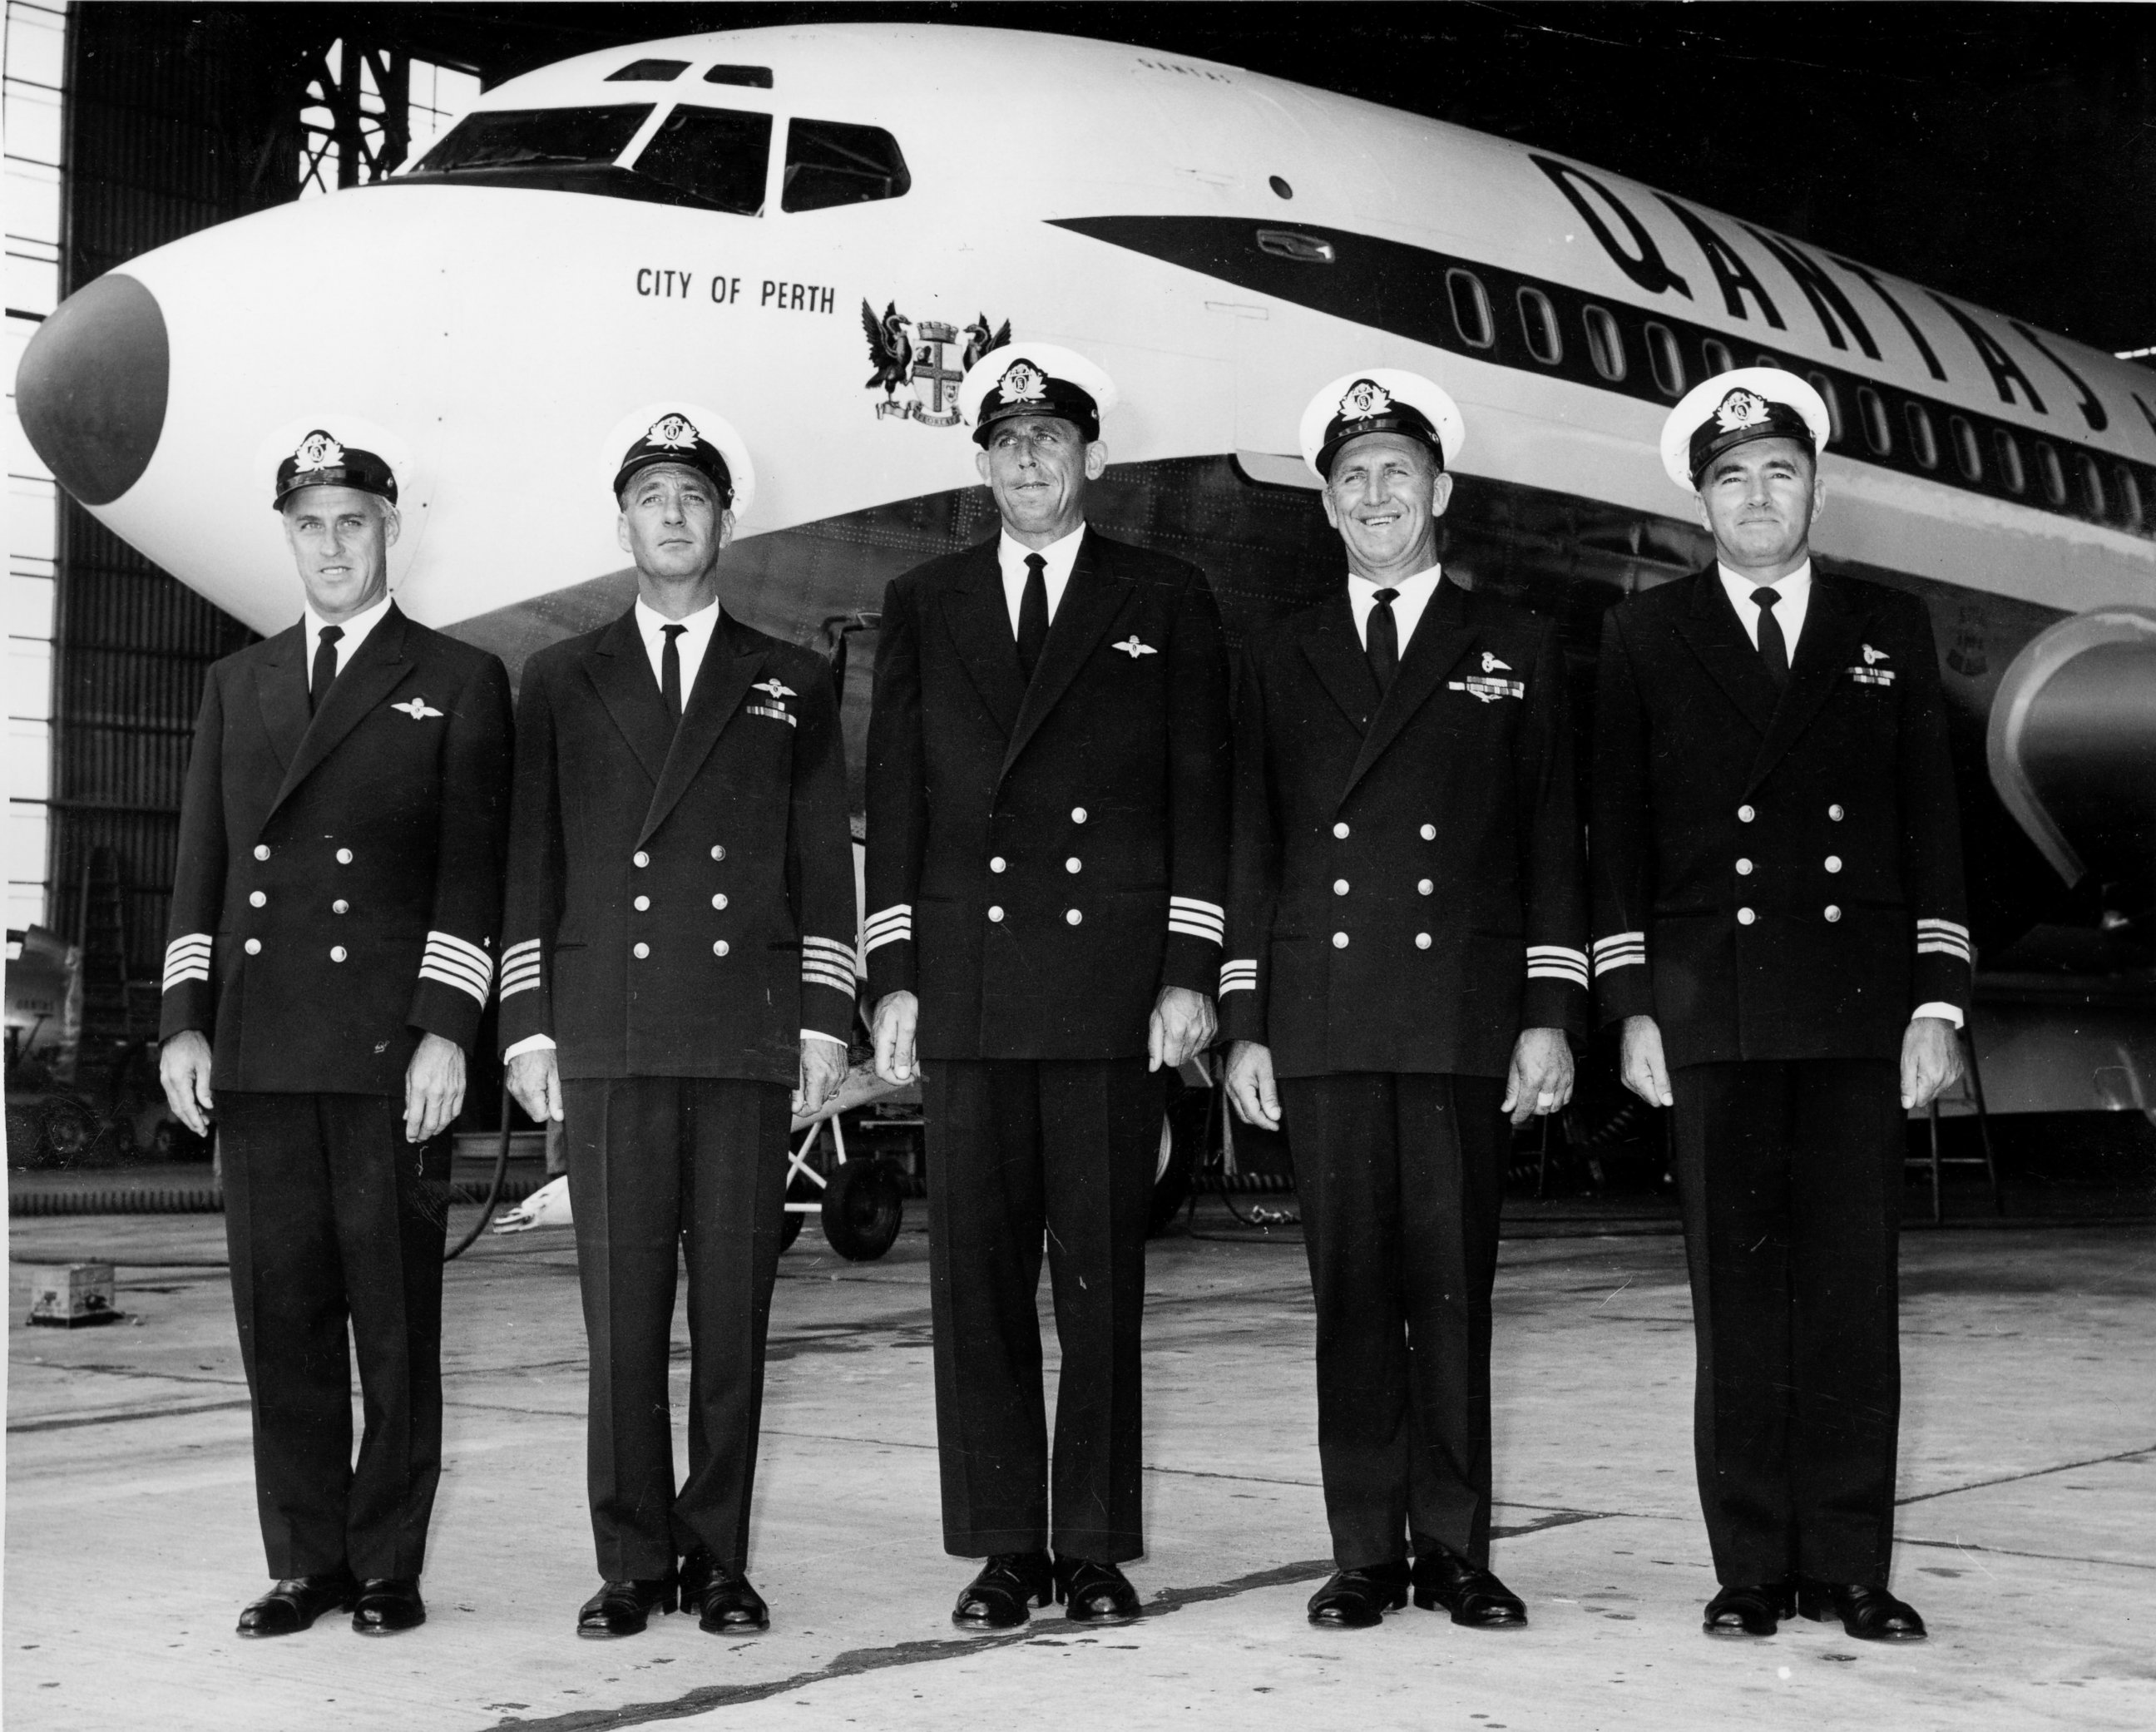 PHOTO: The pilots uniforms for Qantas Airlines, 1960s. 